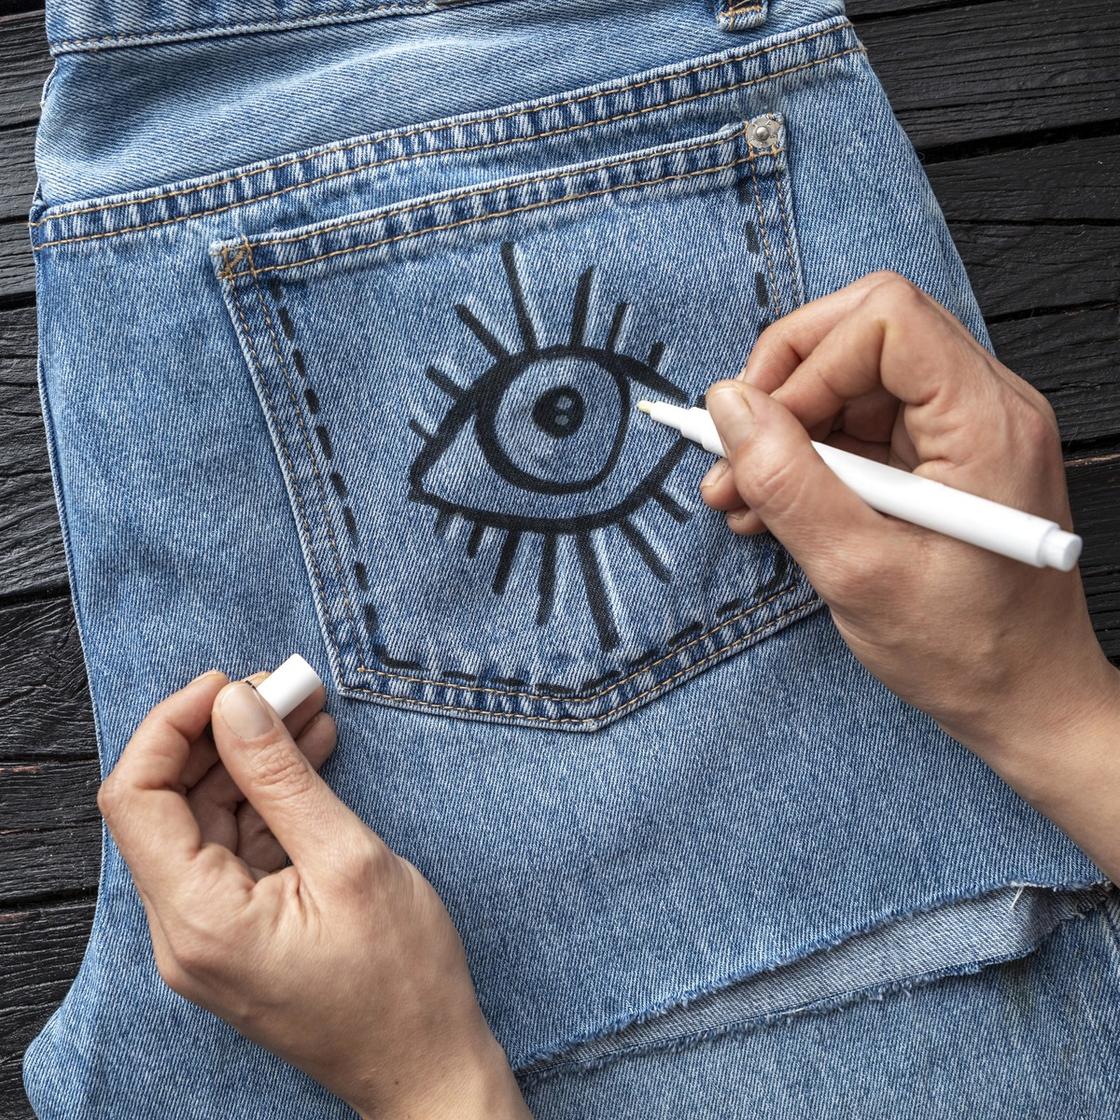 На джинсах рисуют маркером глаз